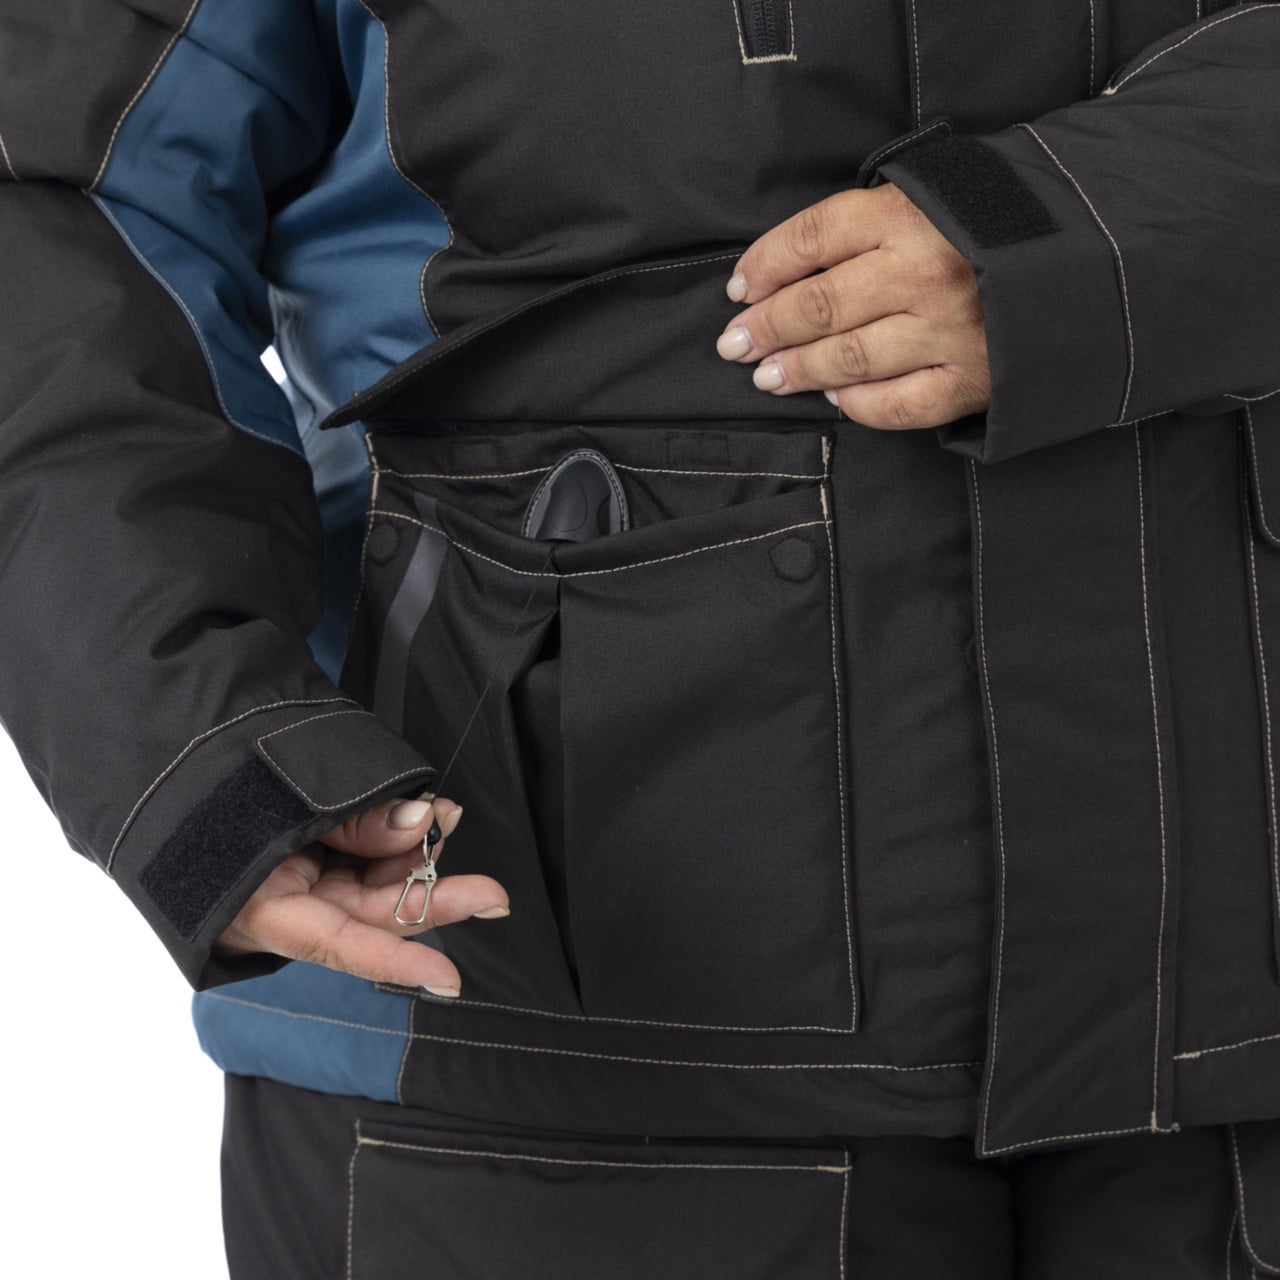 DSG Outerwear Avid 2.0 Ice Jacket, Mulberry, 4XL 